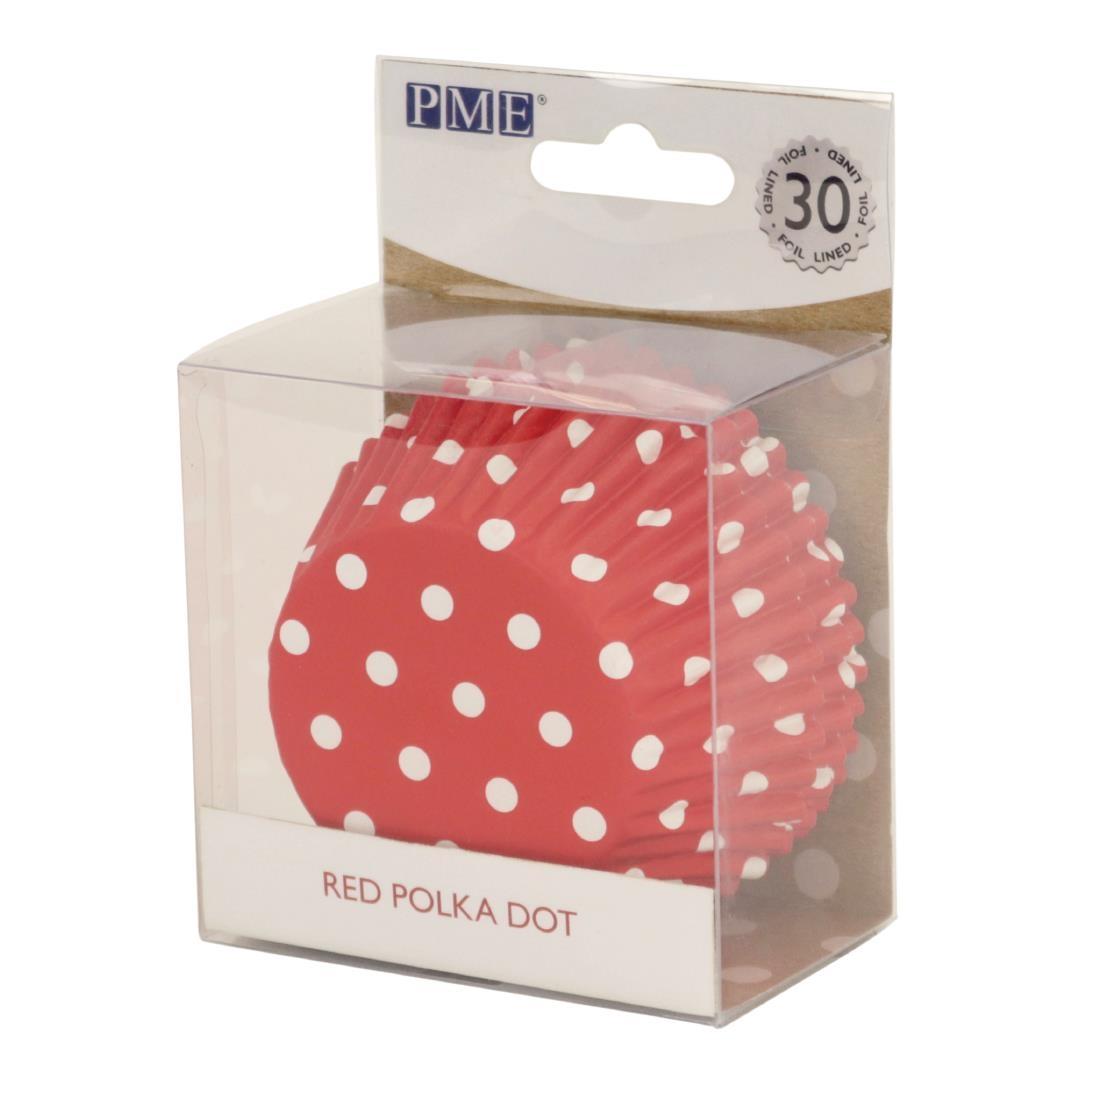 PME Cupcake Foil Lined Baking Cases Polka Dot (Pack of 30) - GE849  - 1